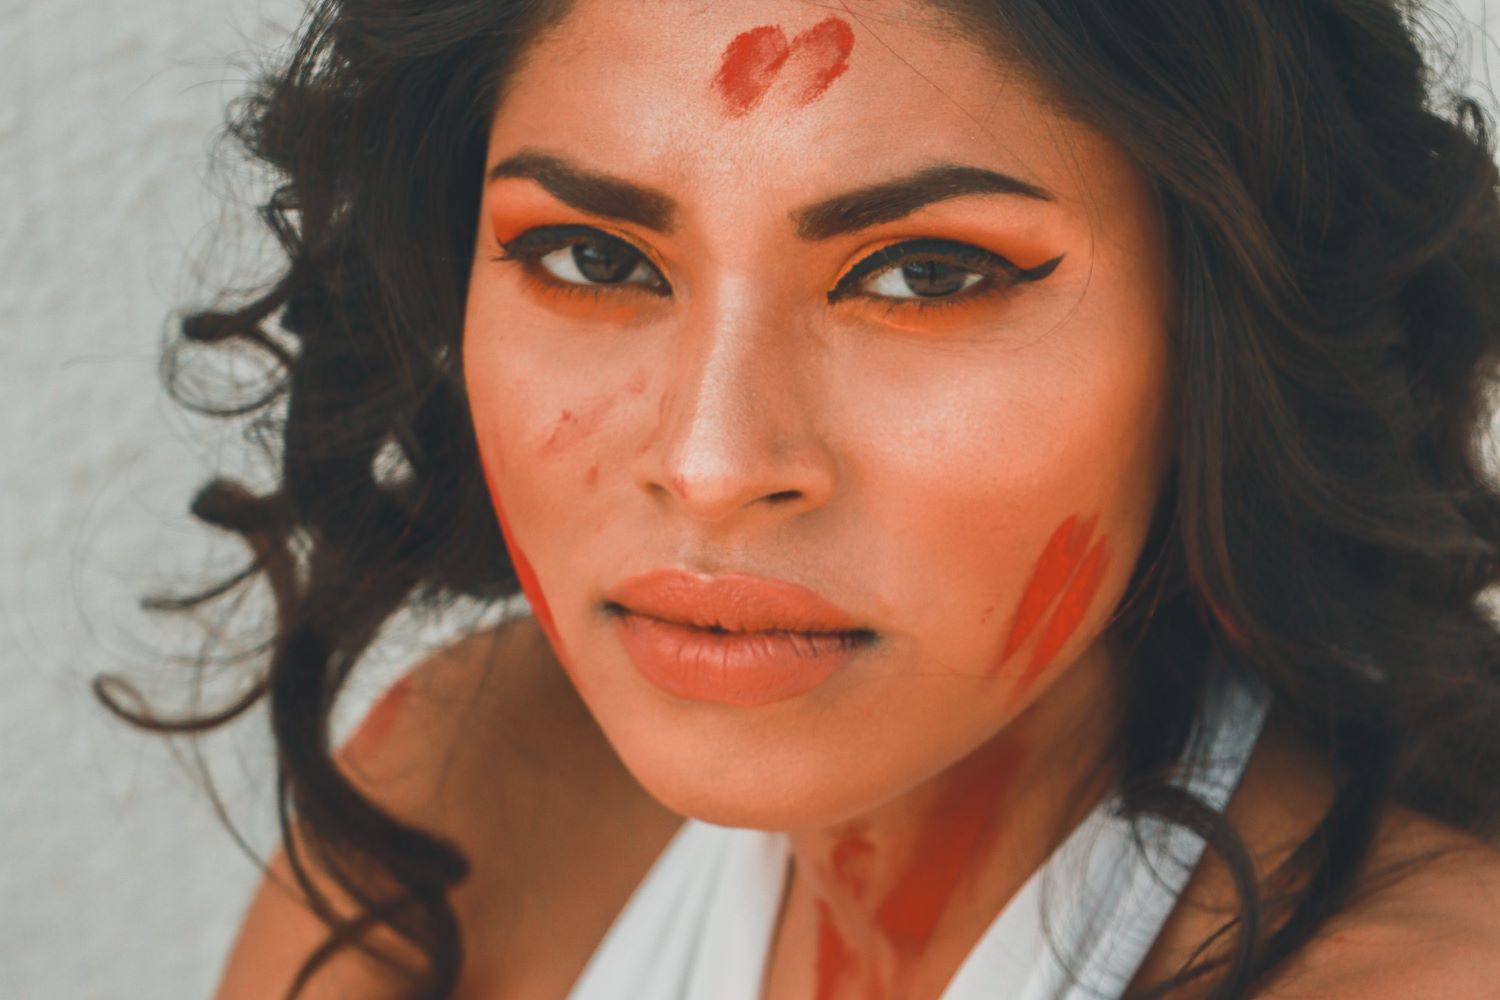 Photo: Sakshi Patwa via <a href="https://www.pexels.com/photo/portrait-of-a-brunette-with-red-smudges-on-face-7295417/" rel="noopener" target="_blank">Pexels</a>